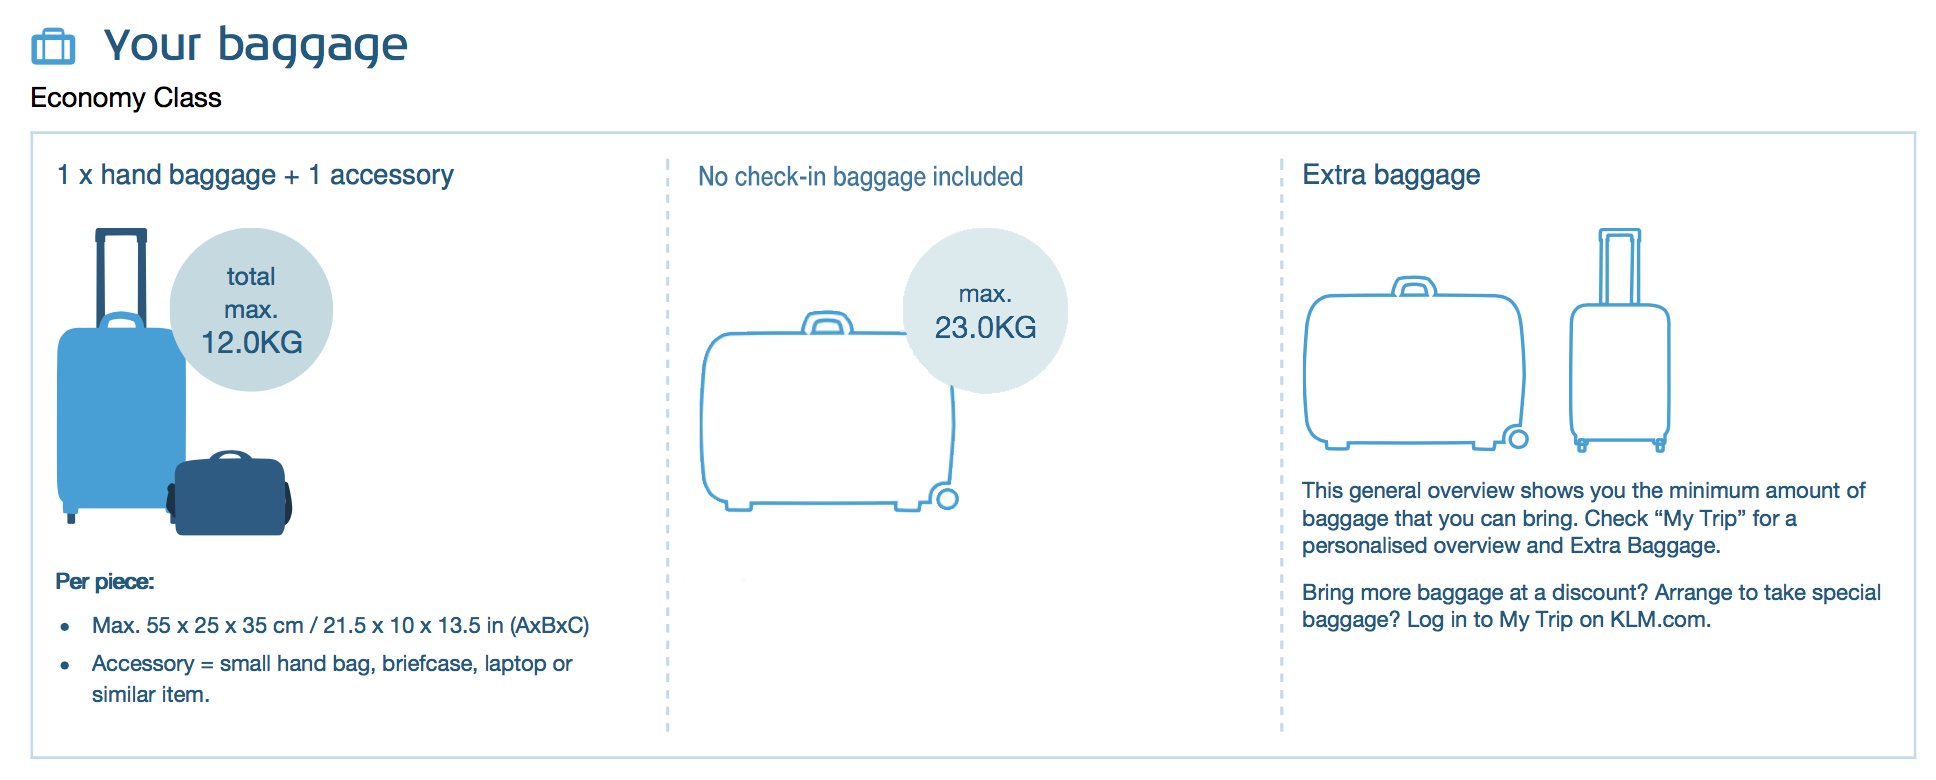 transavia flying blue baggage